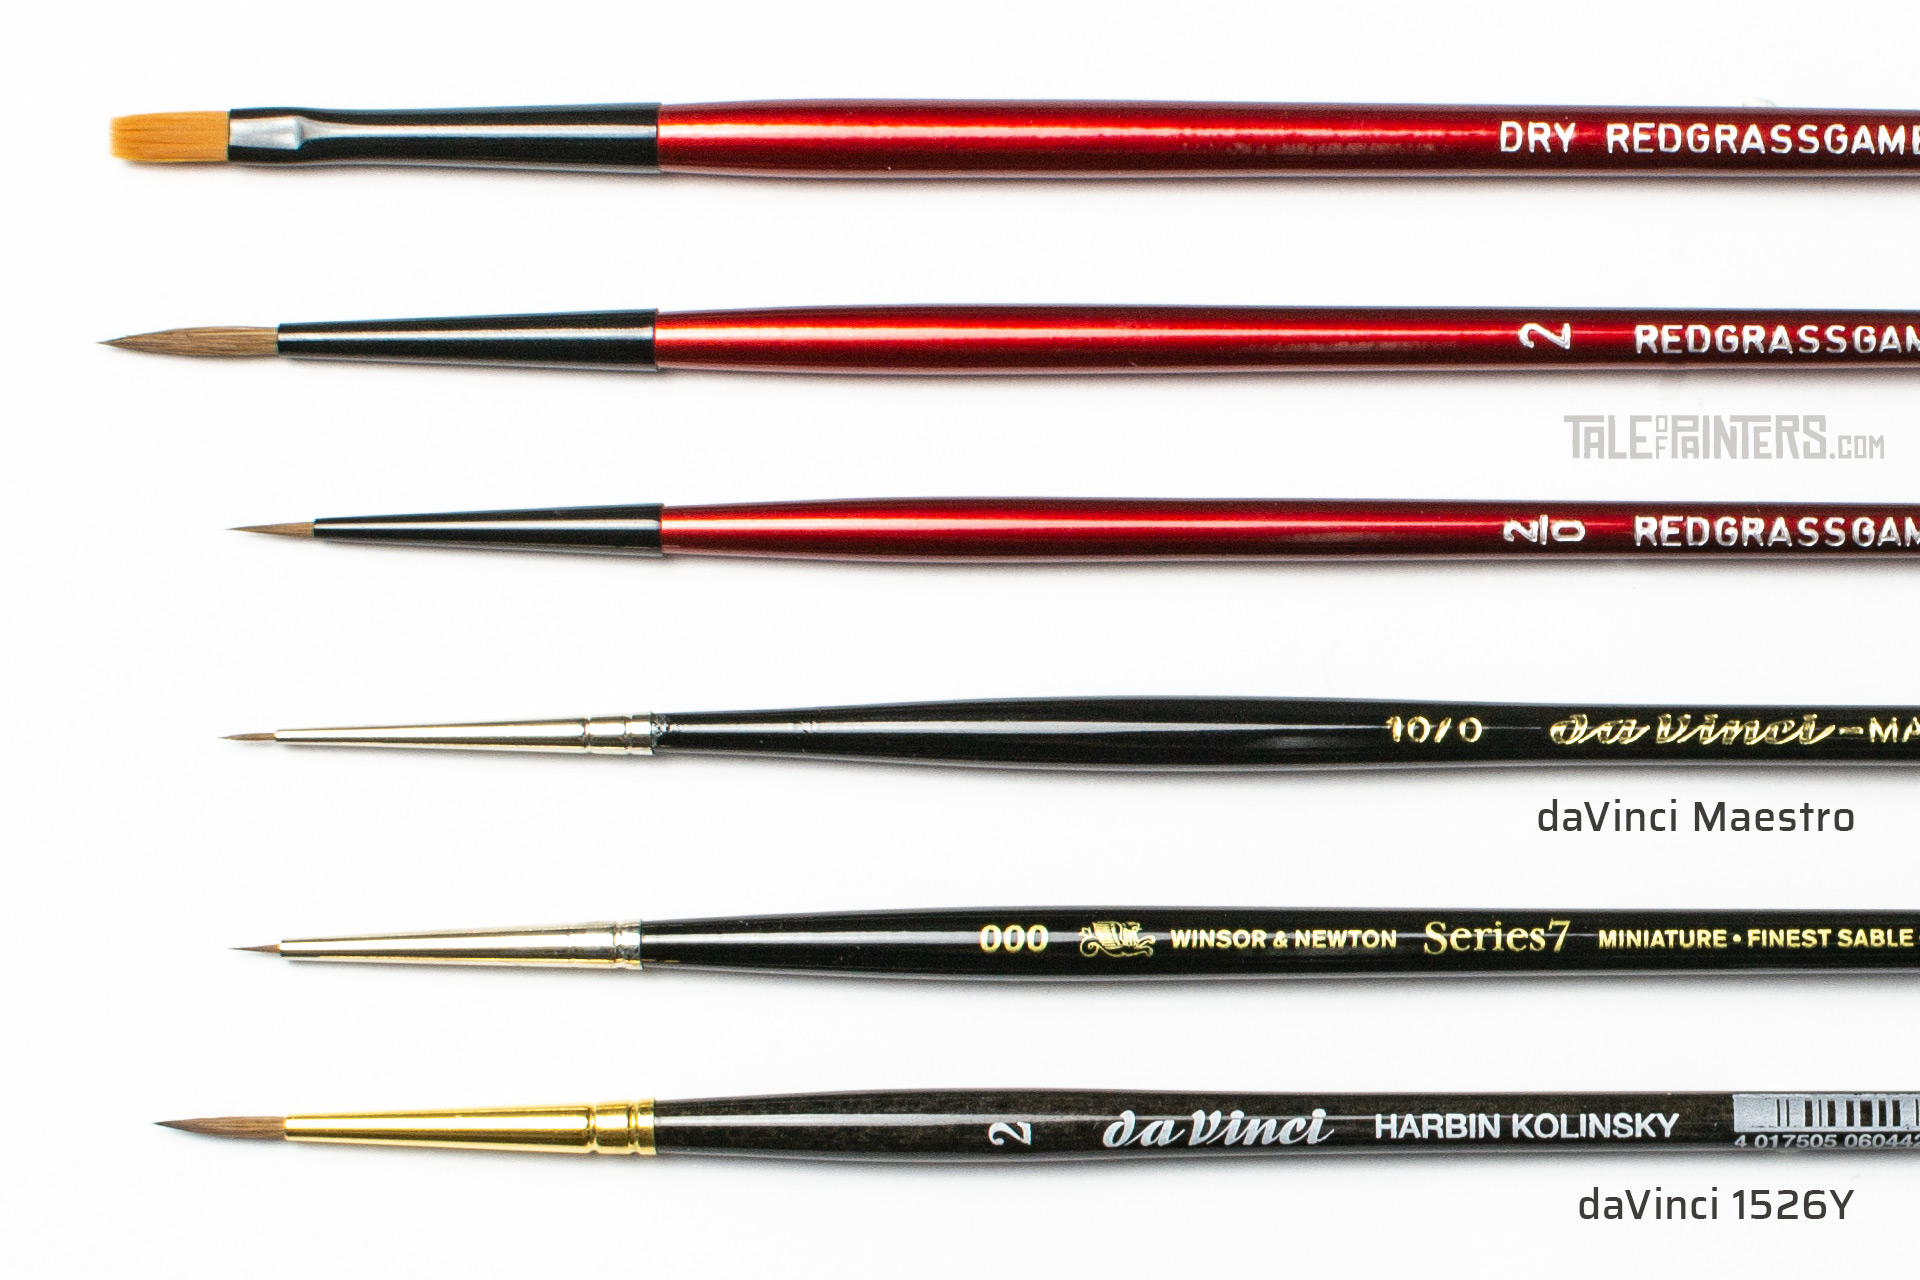 A comparison of Redgrass Games RGG Premium Brushes, daVinci Maestro and 1526Y, Winsor & Newton Series 7